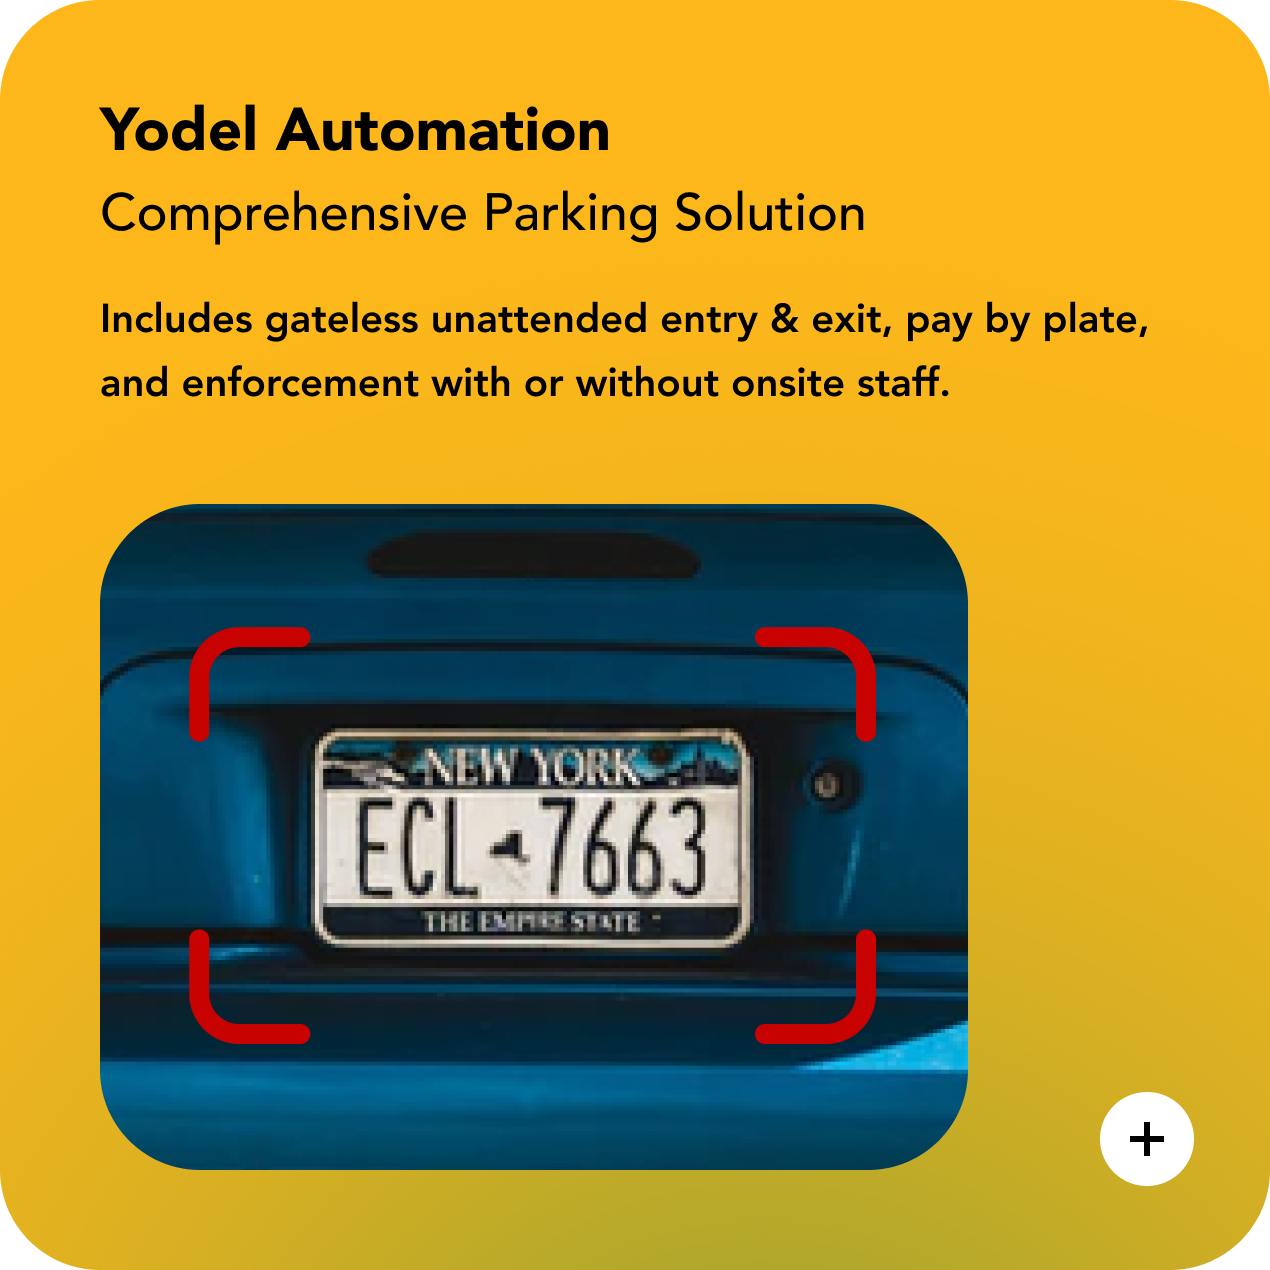 Yodel Automation: Comprehensive Parking Solution.